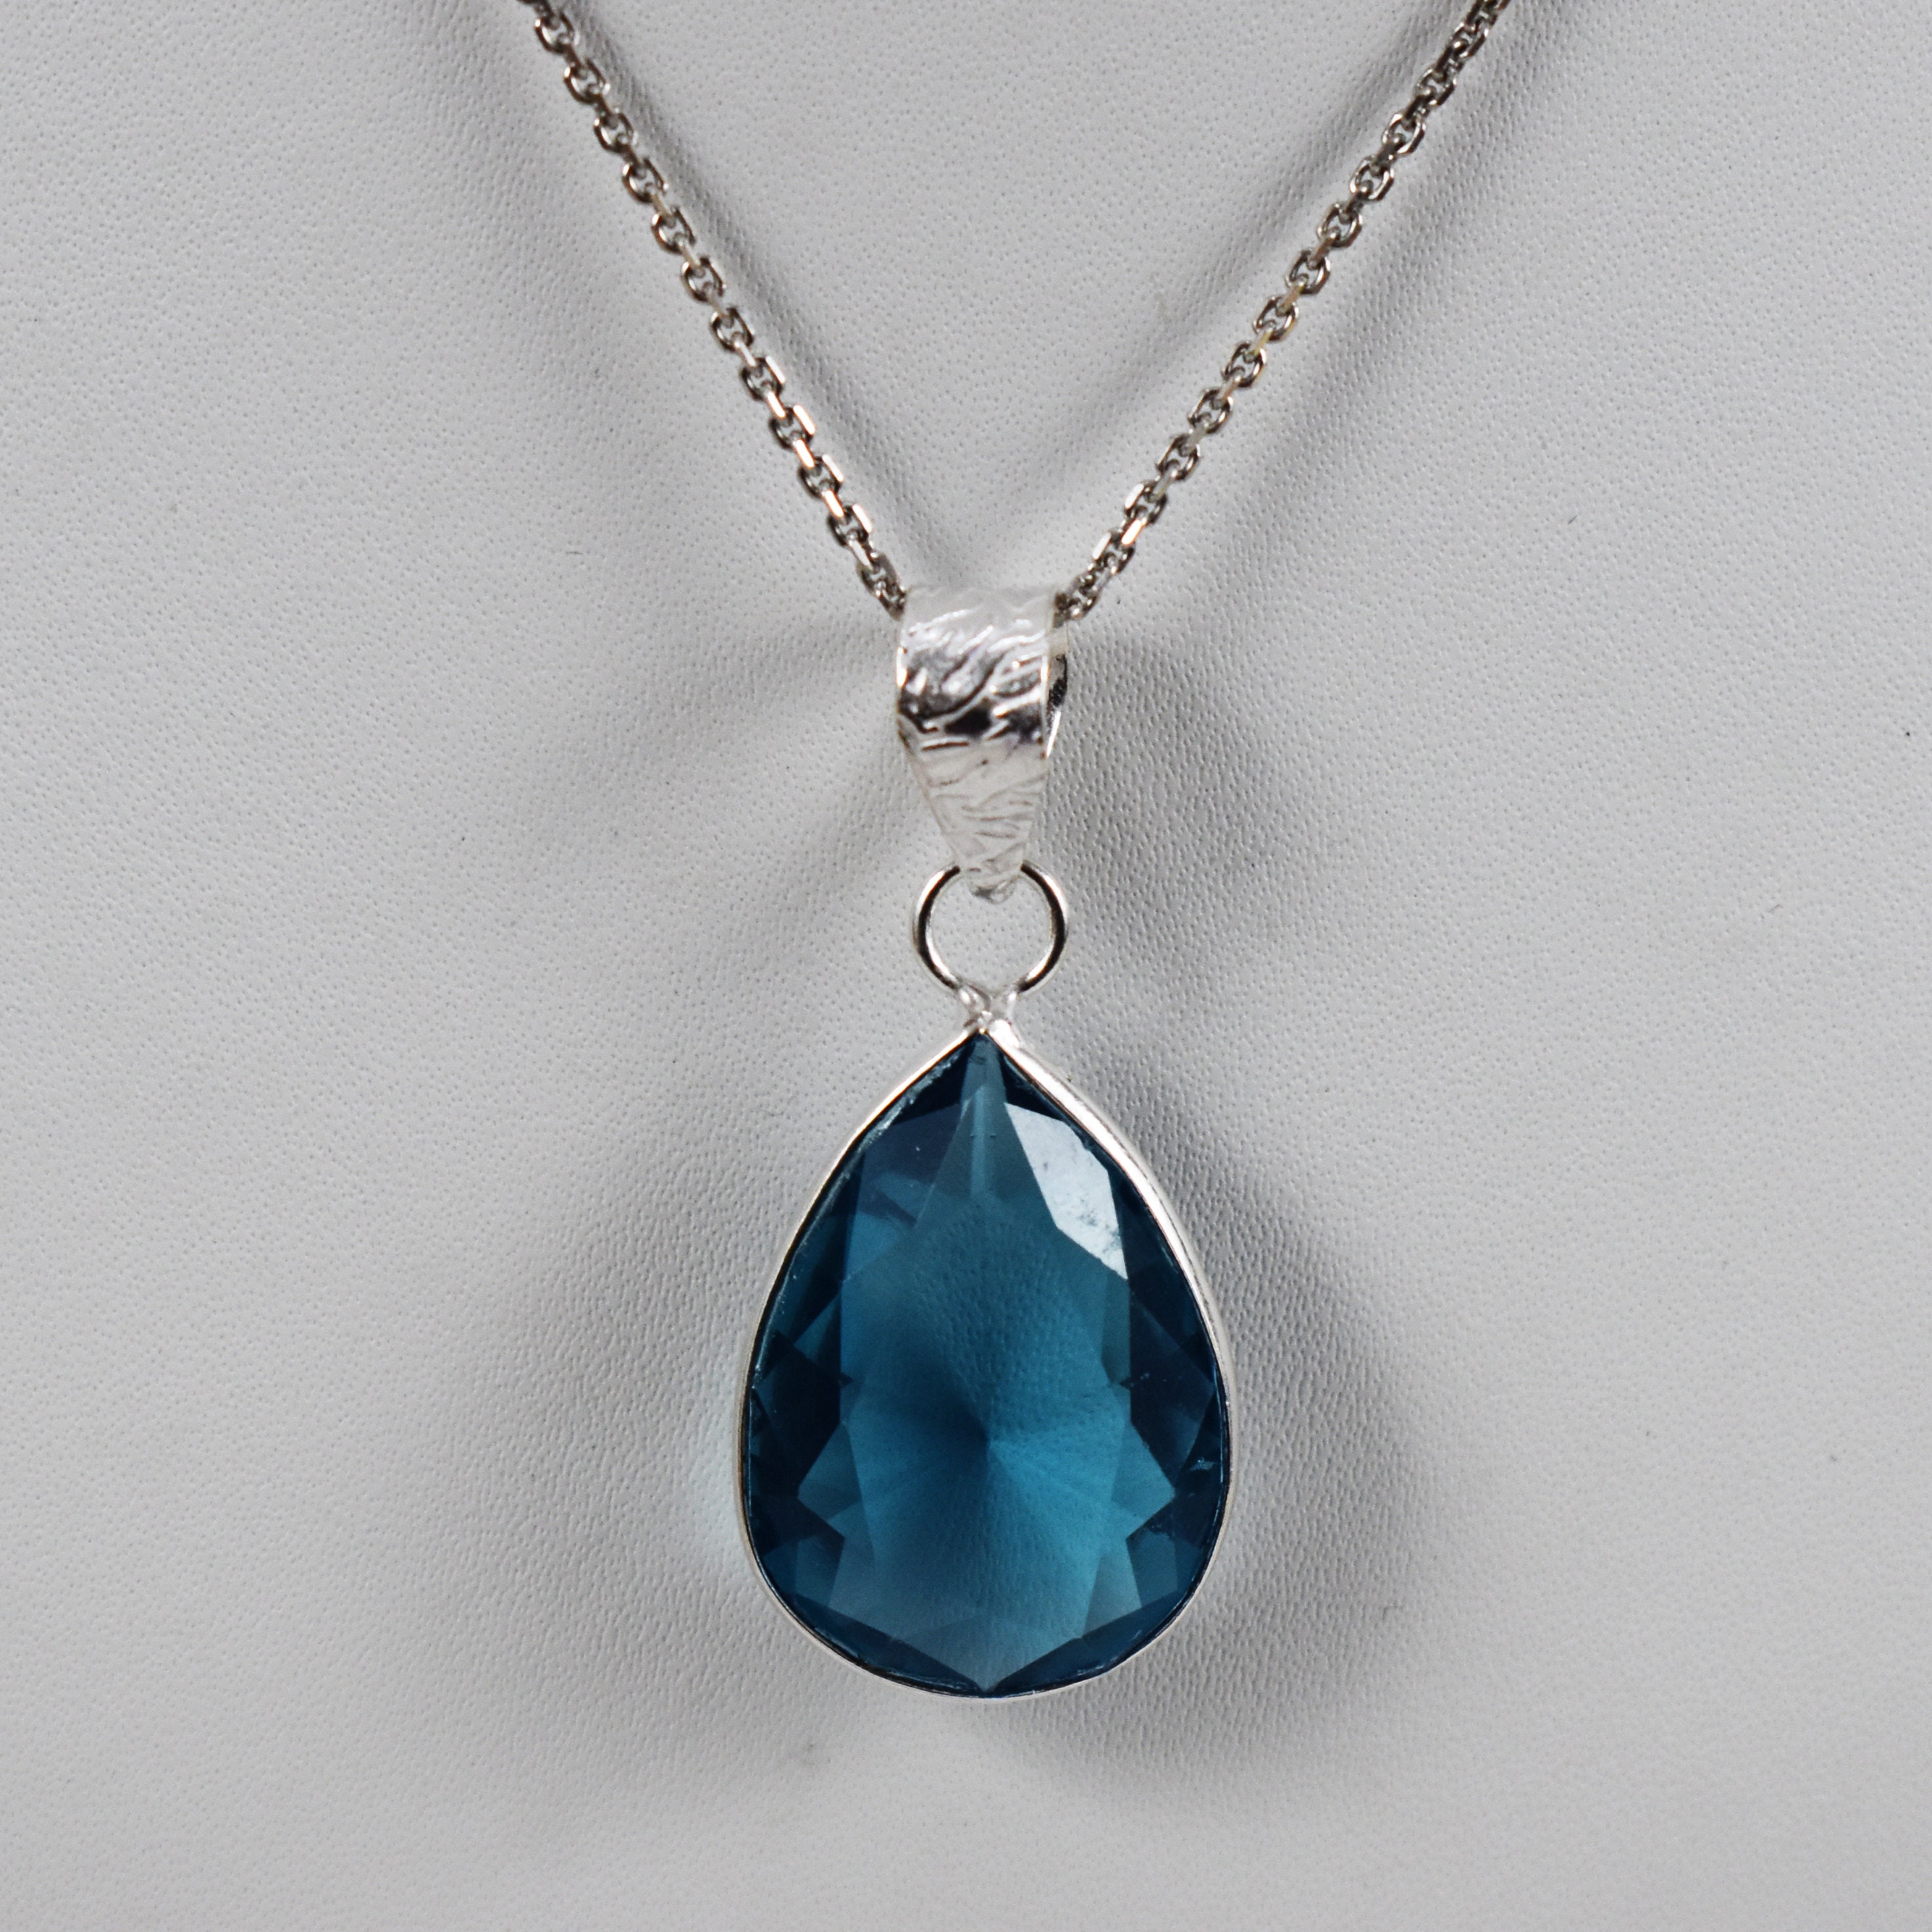 Buy London Blue Topaz Pendant Necklace-925 Sterling Silver Pendant